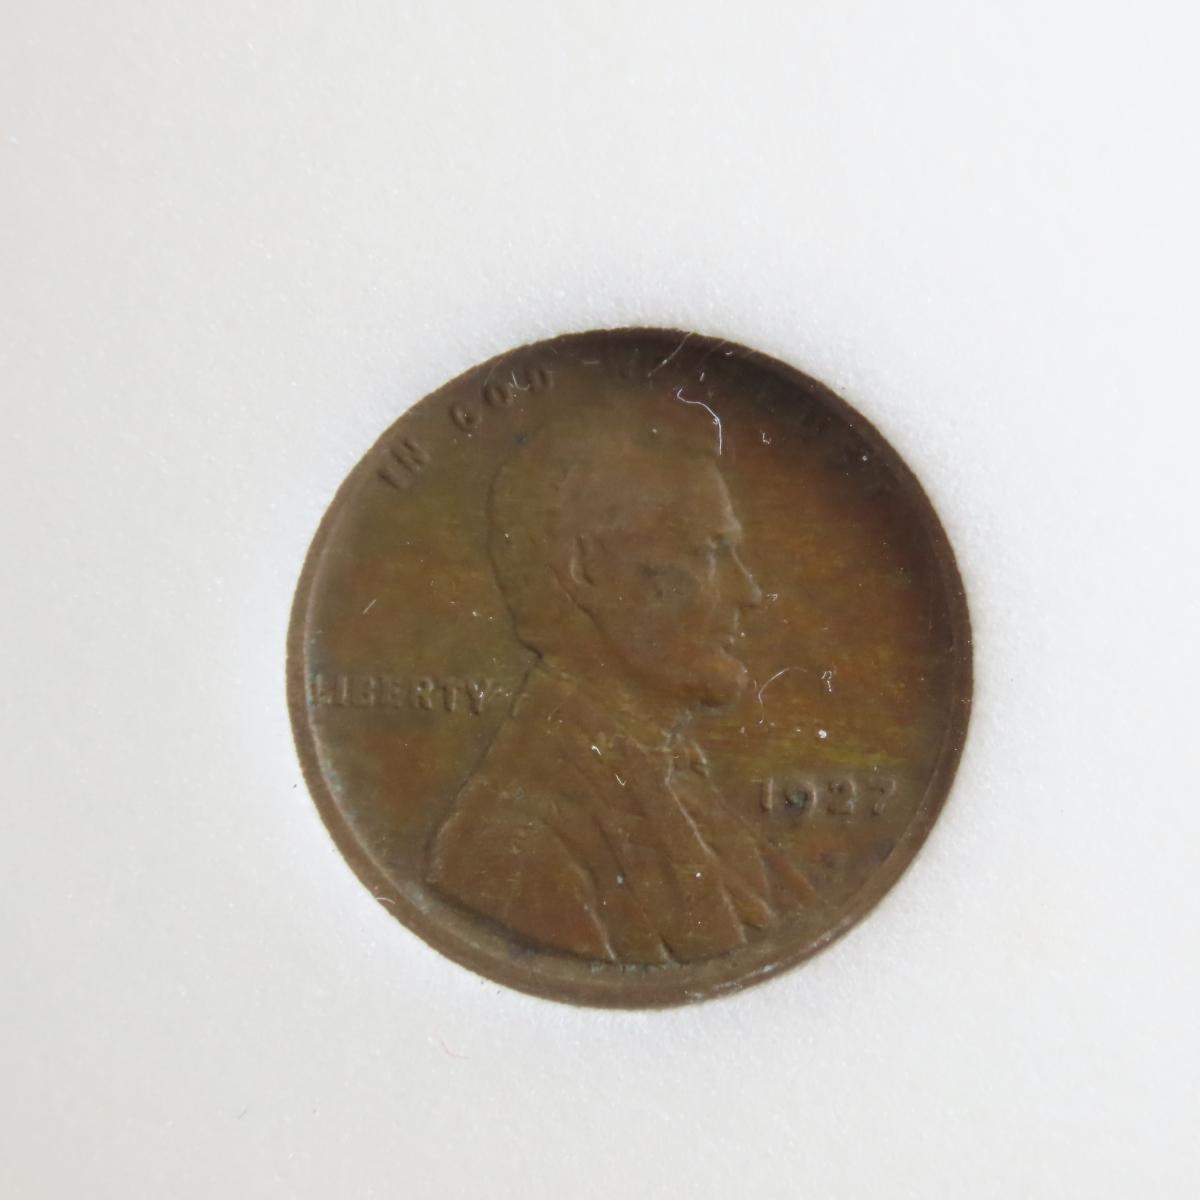 Loose & Graded Liberty V & Buffalo Nickels, Cents